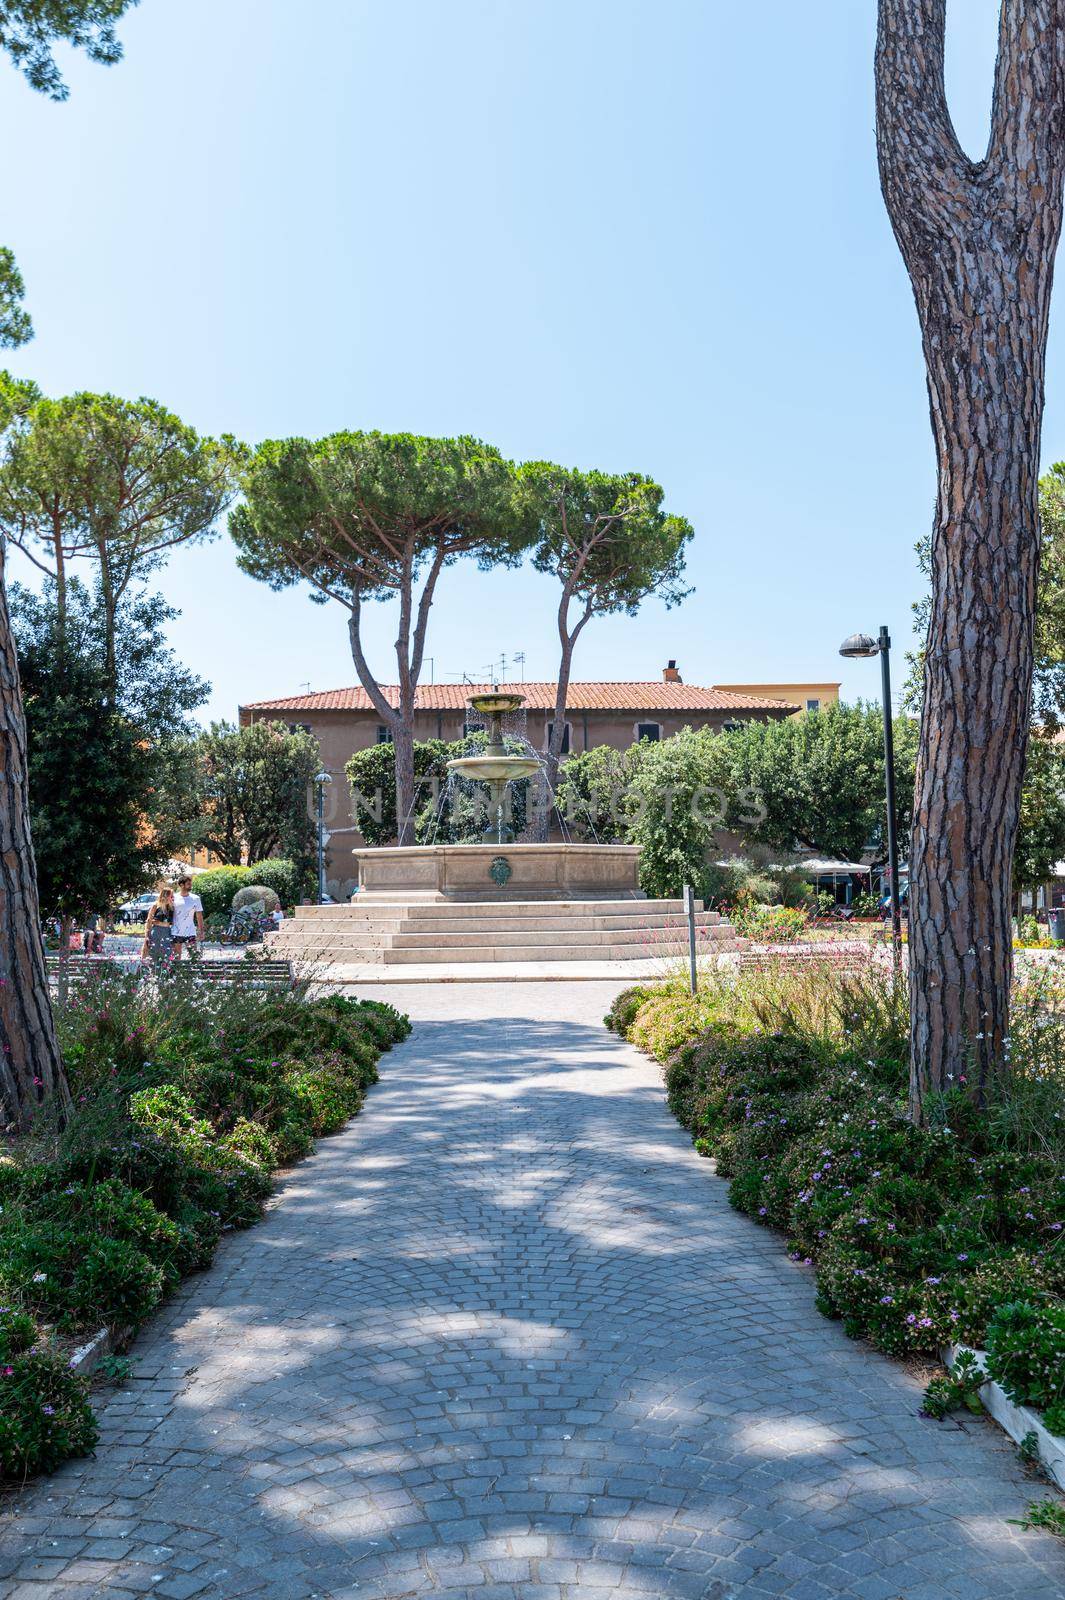 public gardens the fountain of orbetello by carfedeph